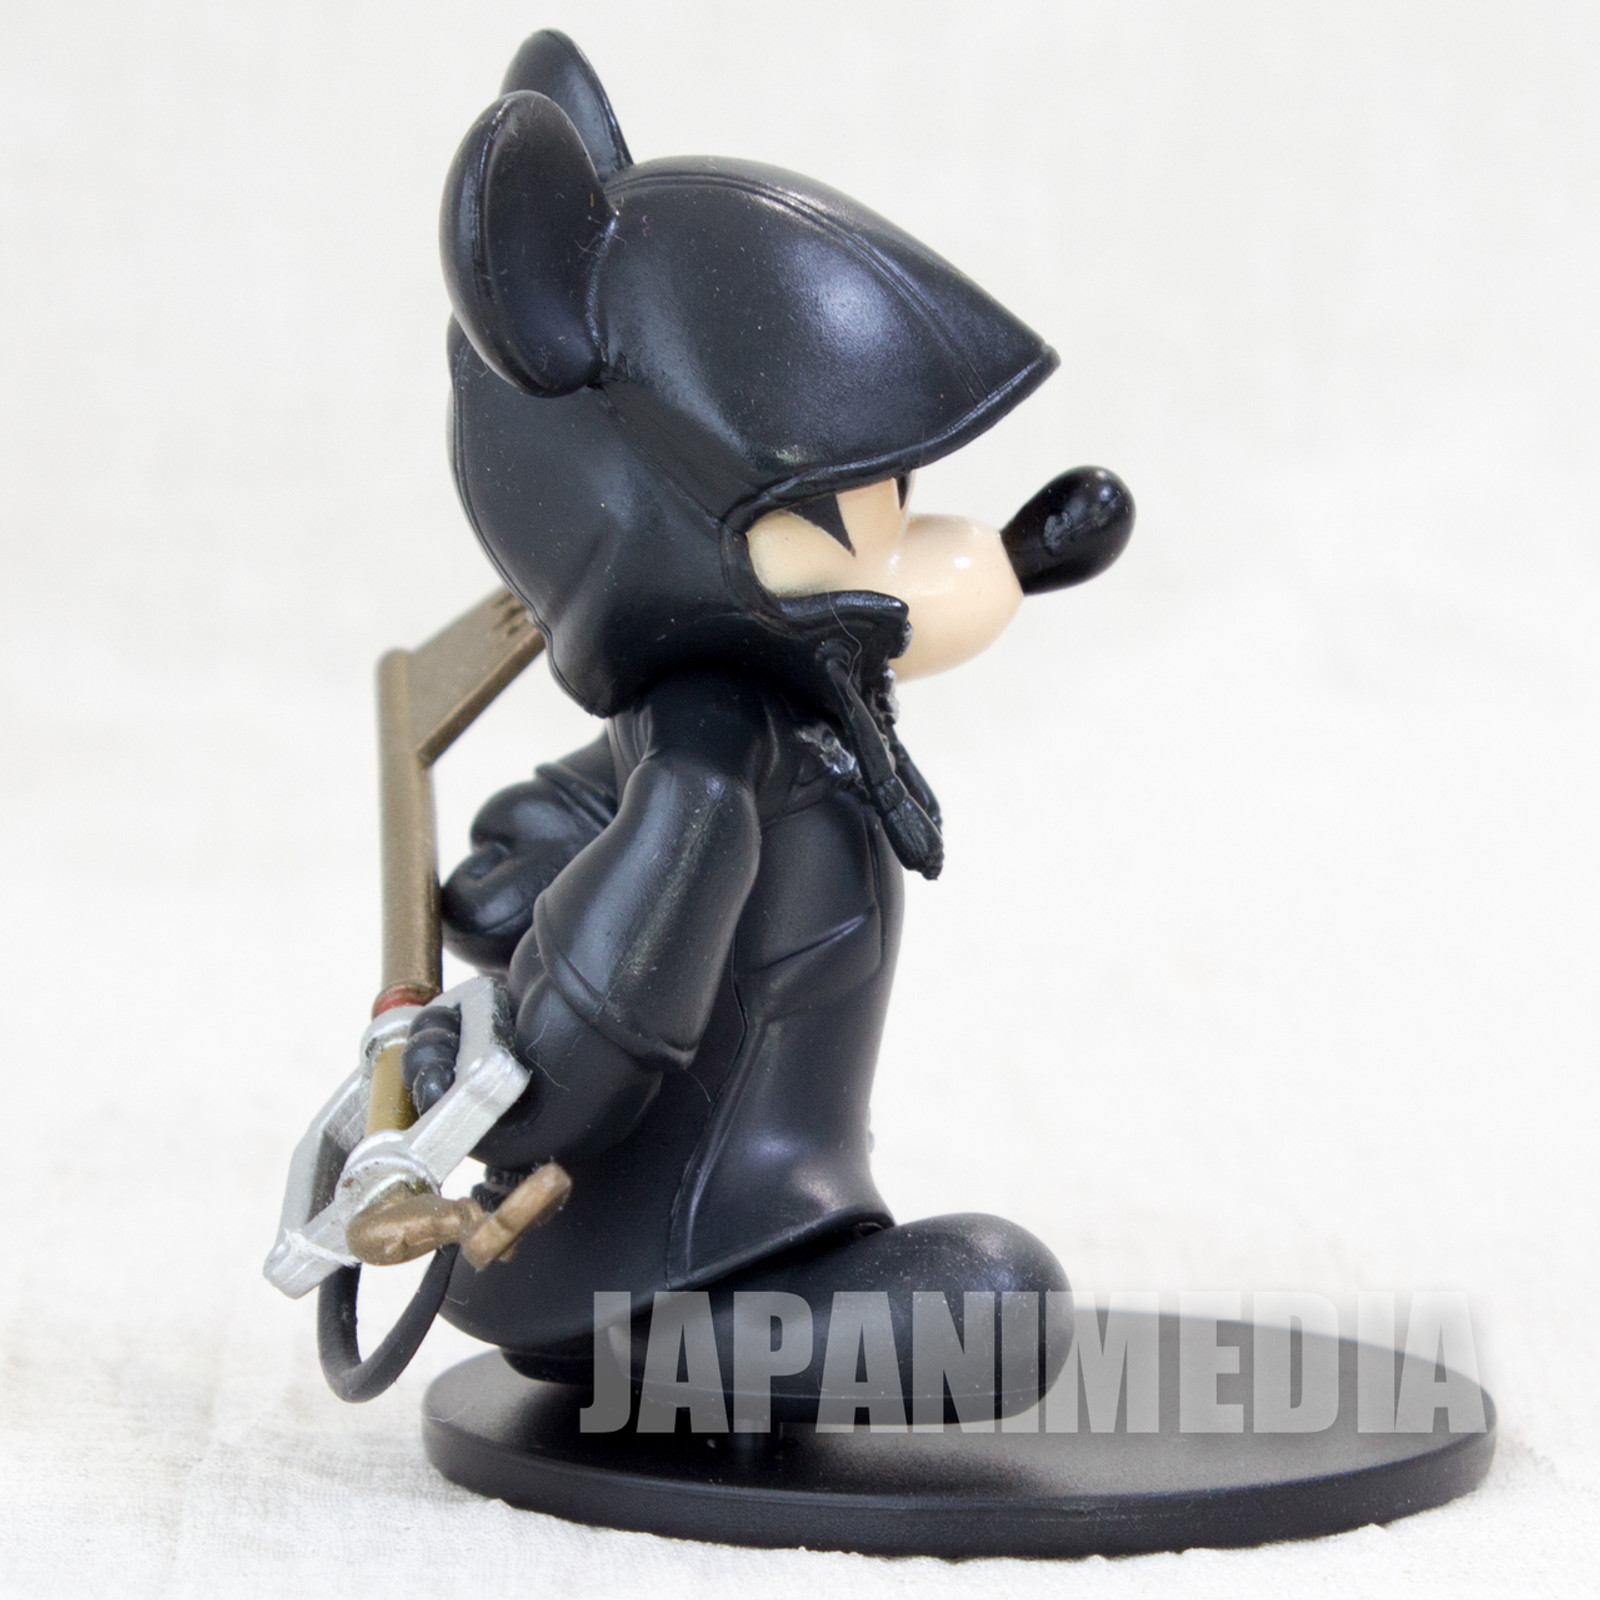 Medicom Disney Kingdom Hearts King Mickey Statue black